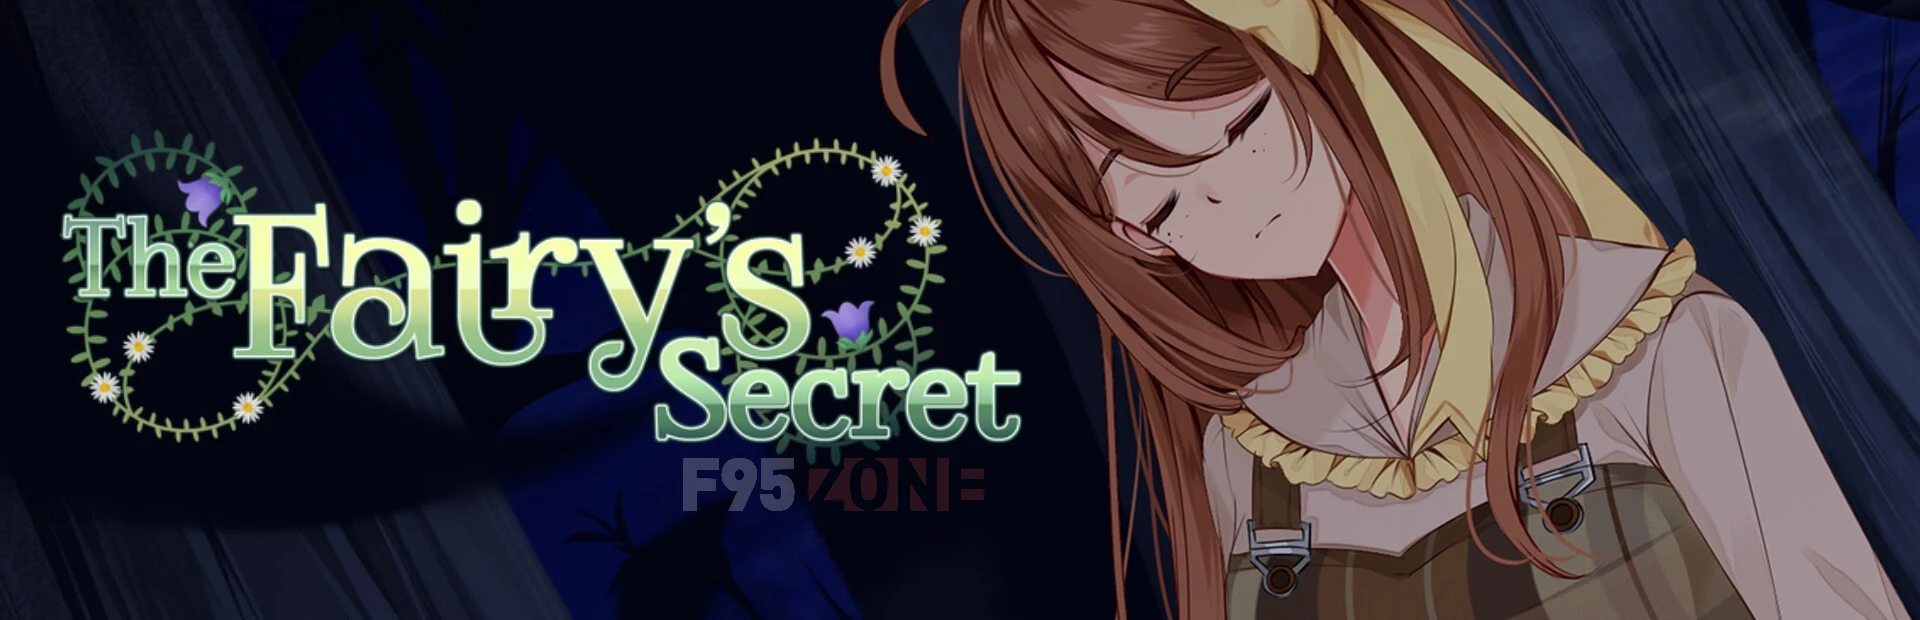 The Fairy's Secret main image